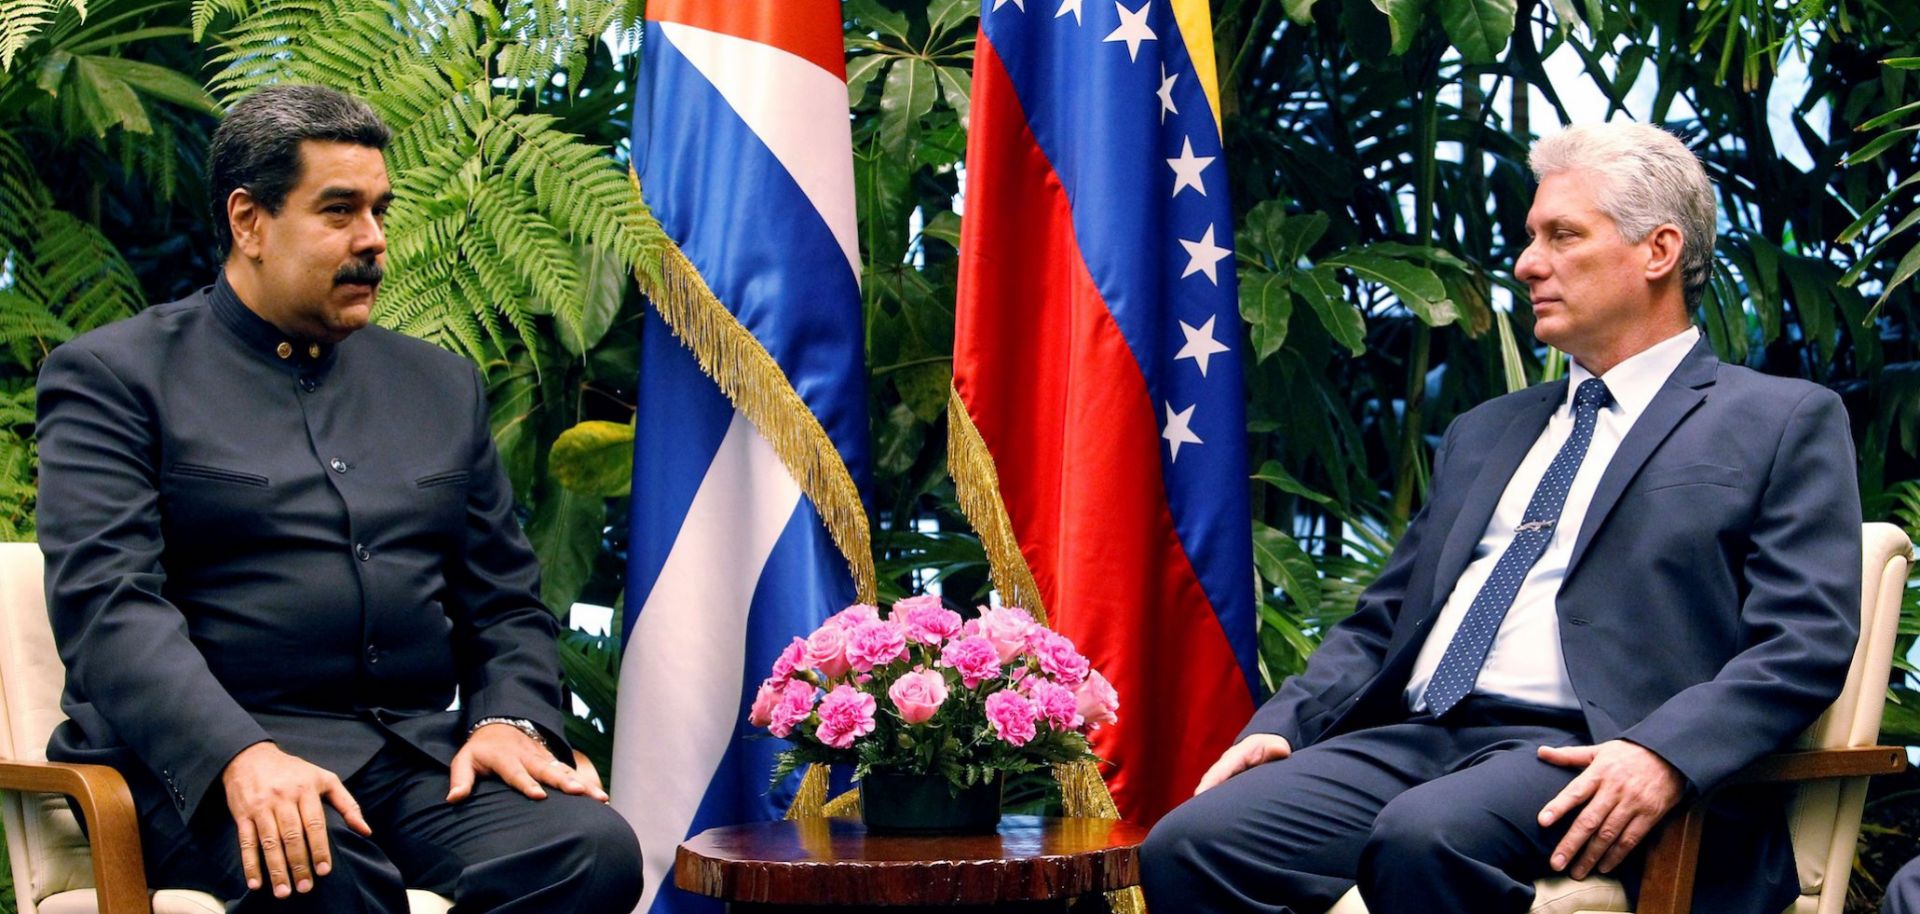 Cuban President Miguel Diaz-Canel and Venezuelan President Nicolas Maduro, left, meet at the Revolution Palace in Havana on April 21, 2018.